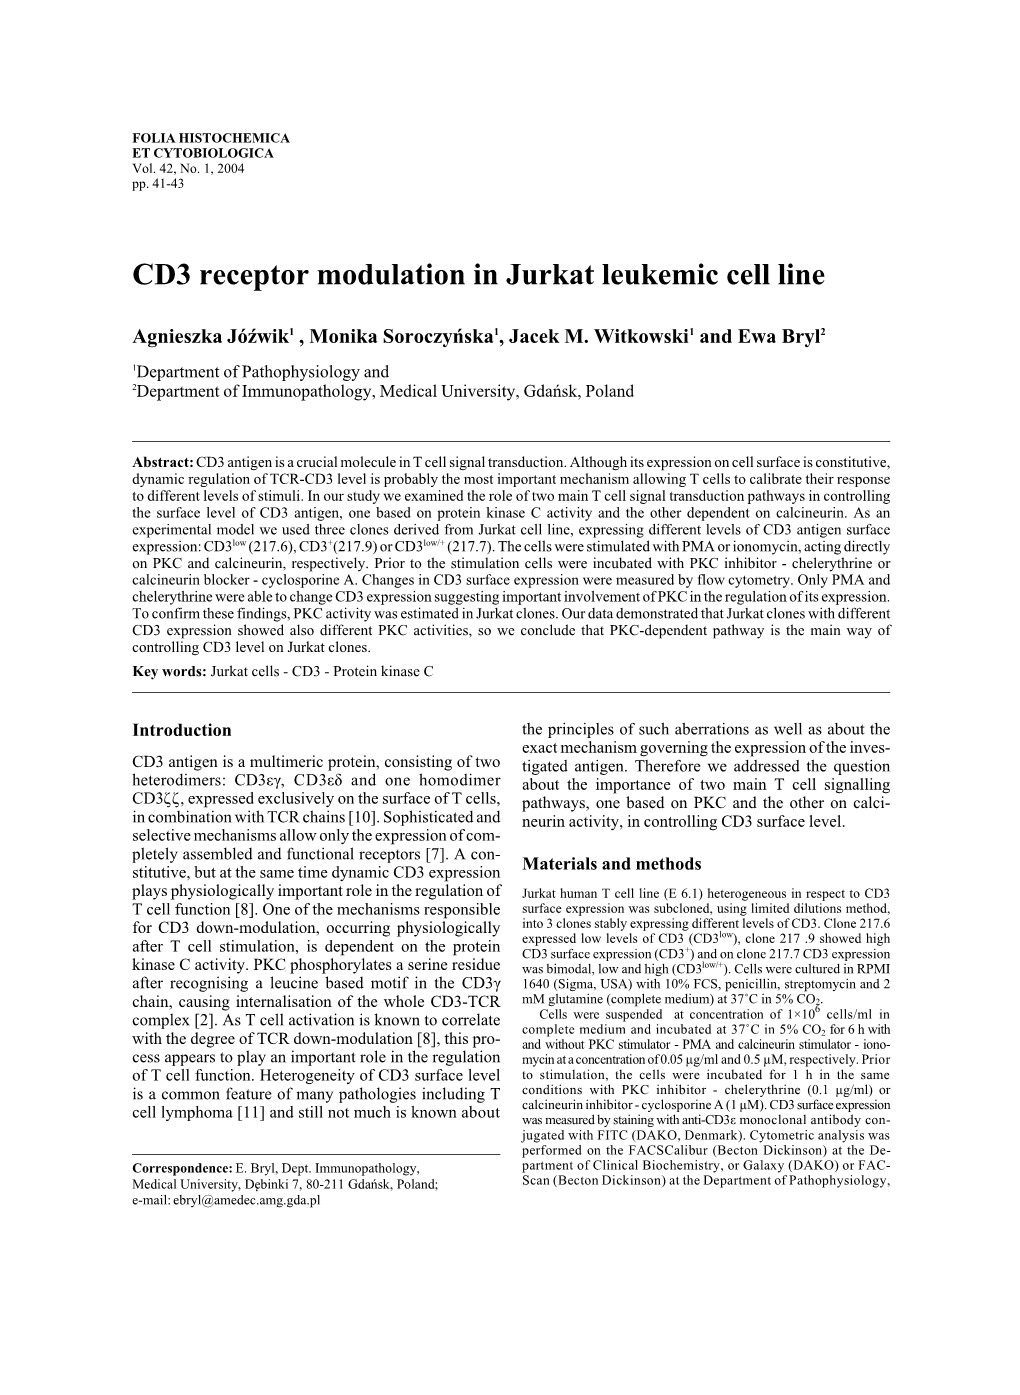 CD3 Receptor Modulation in Jurkat Leukemic Cell Line